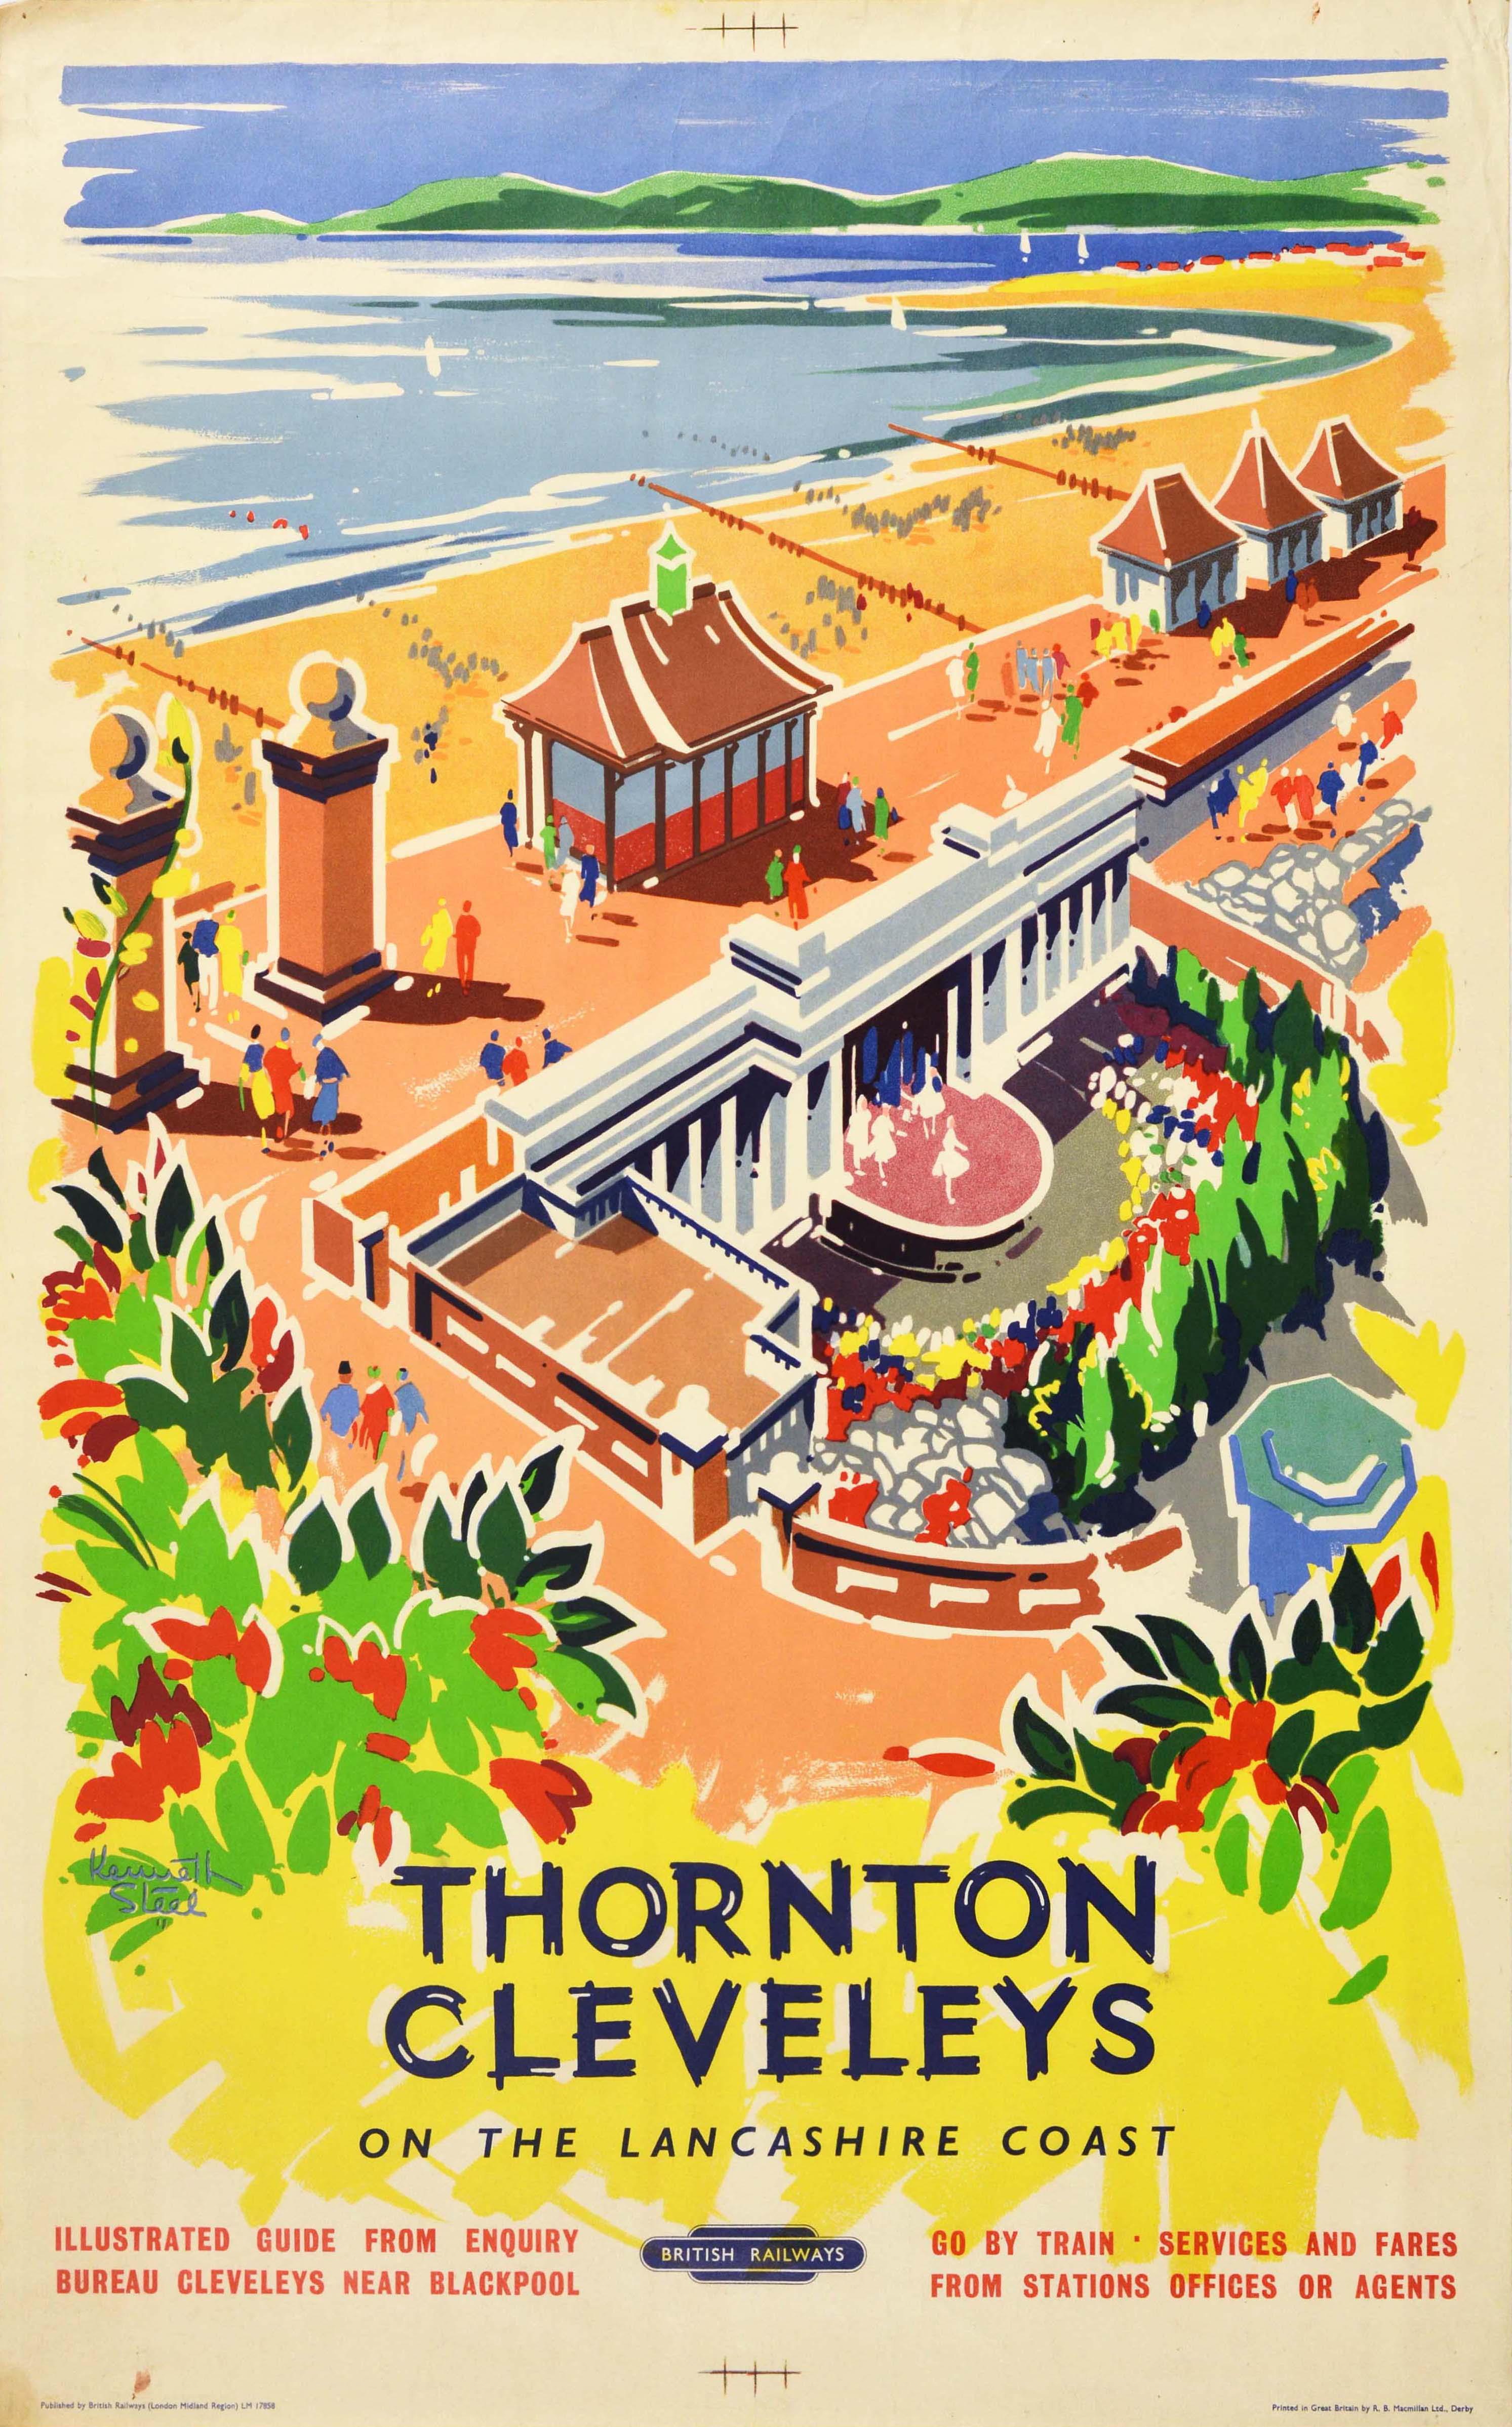 Vintage Transport Railway Rail Travel Poster RE PRINT Fleetwood 